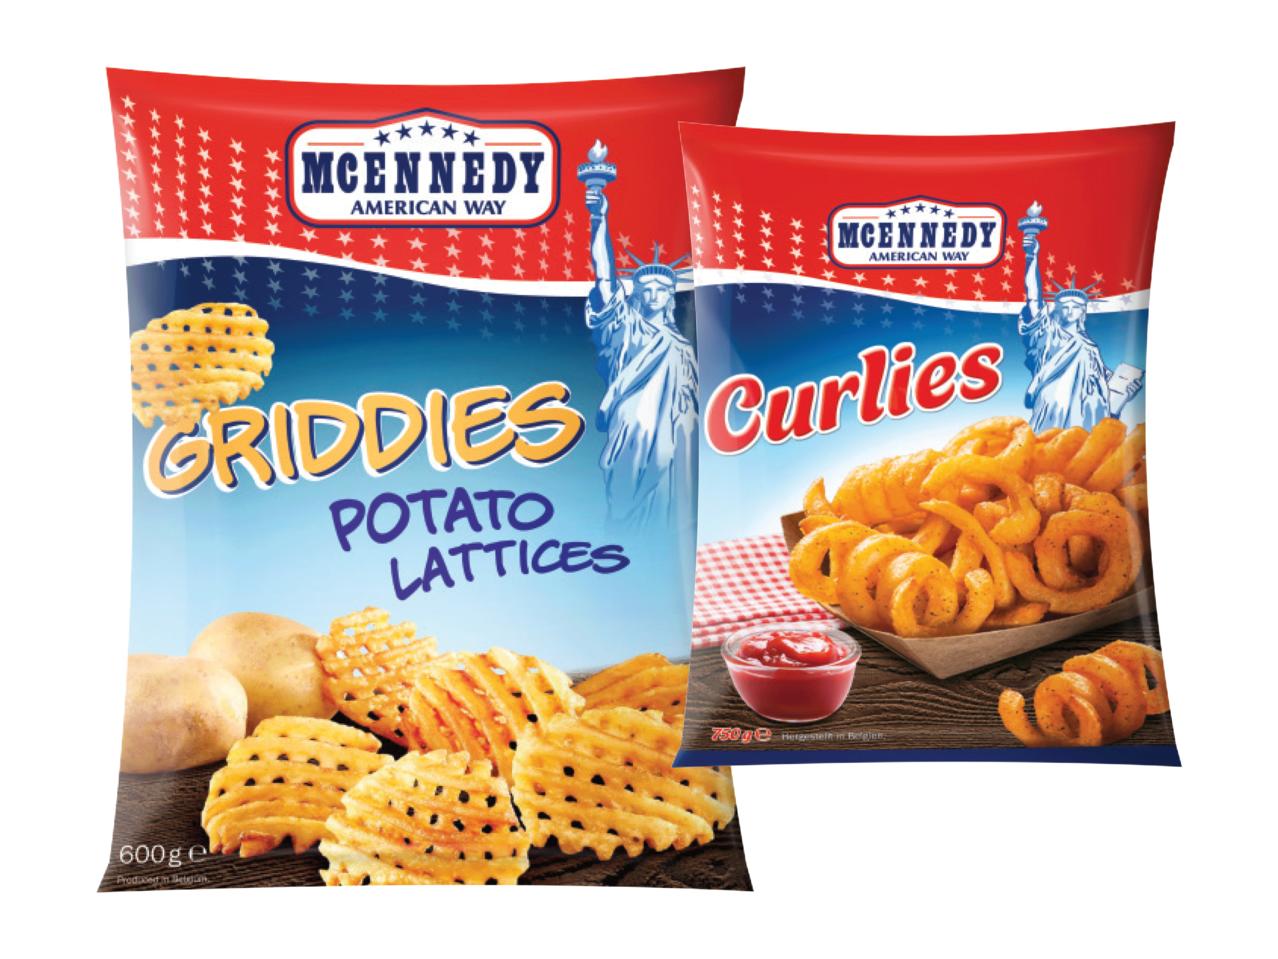 MCENNEDY(R) Griddies Potato Lattices/Curlies